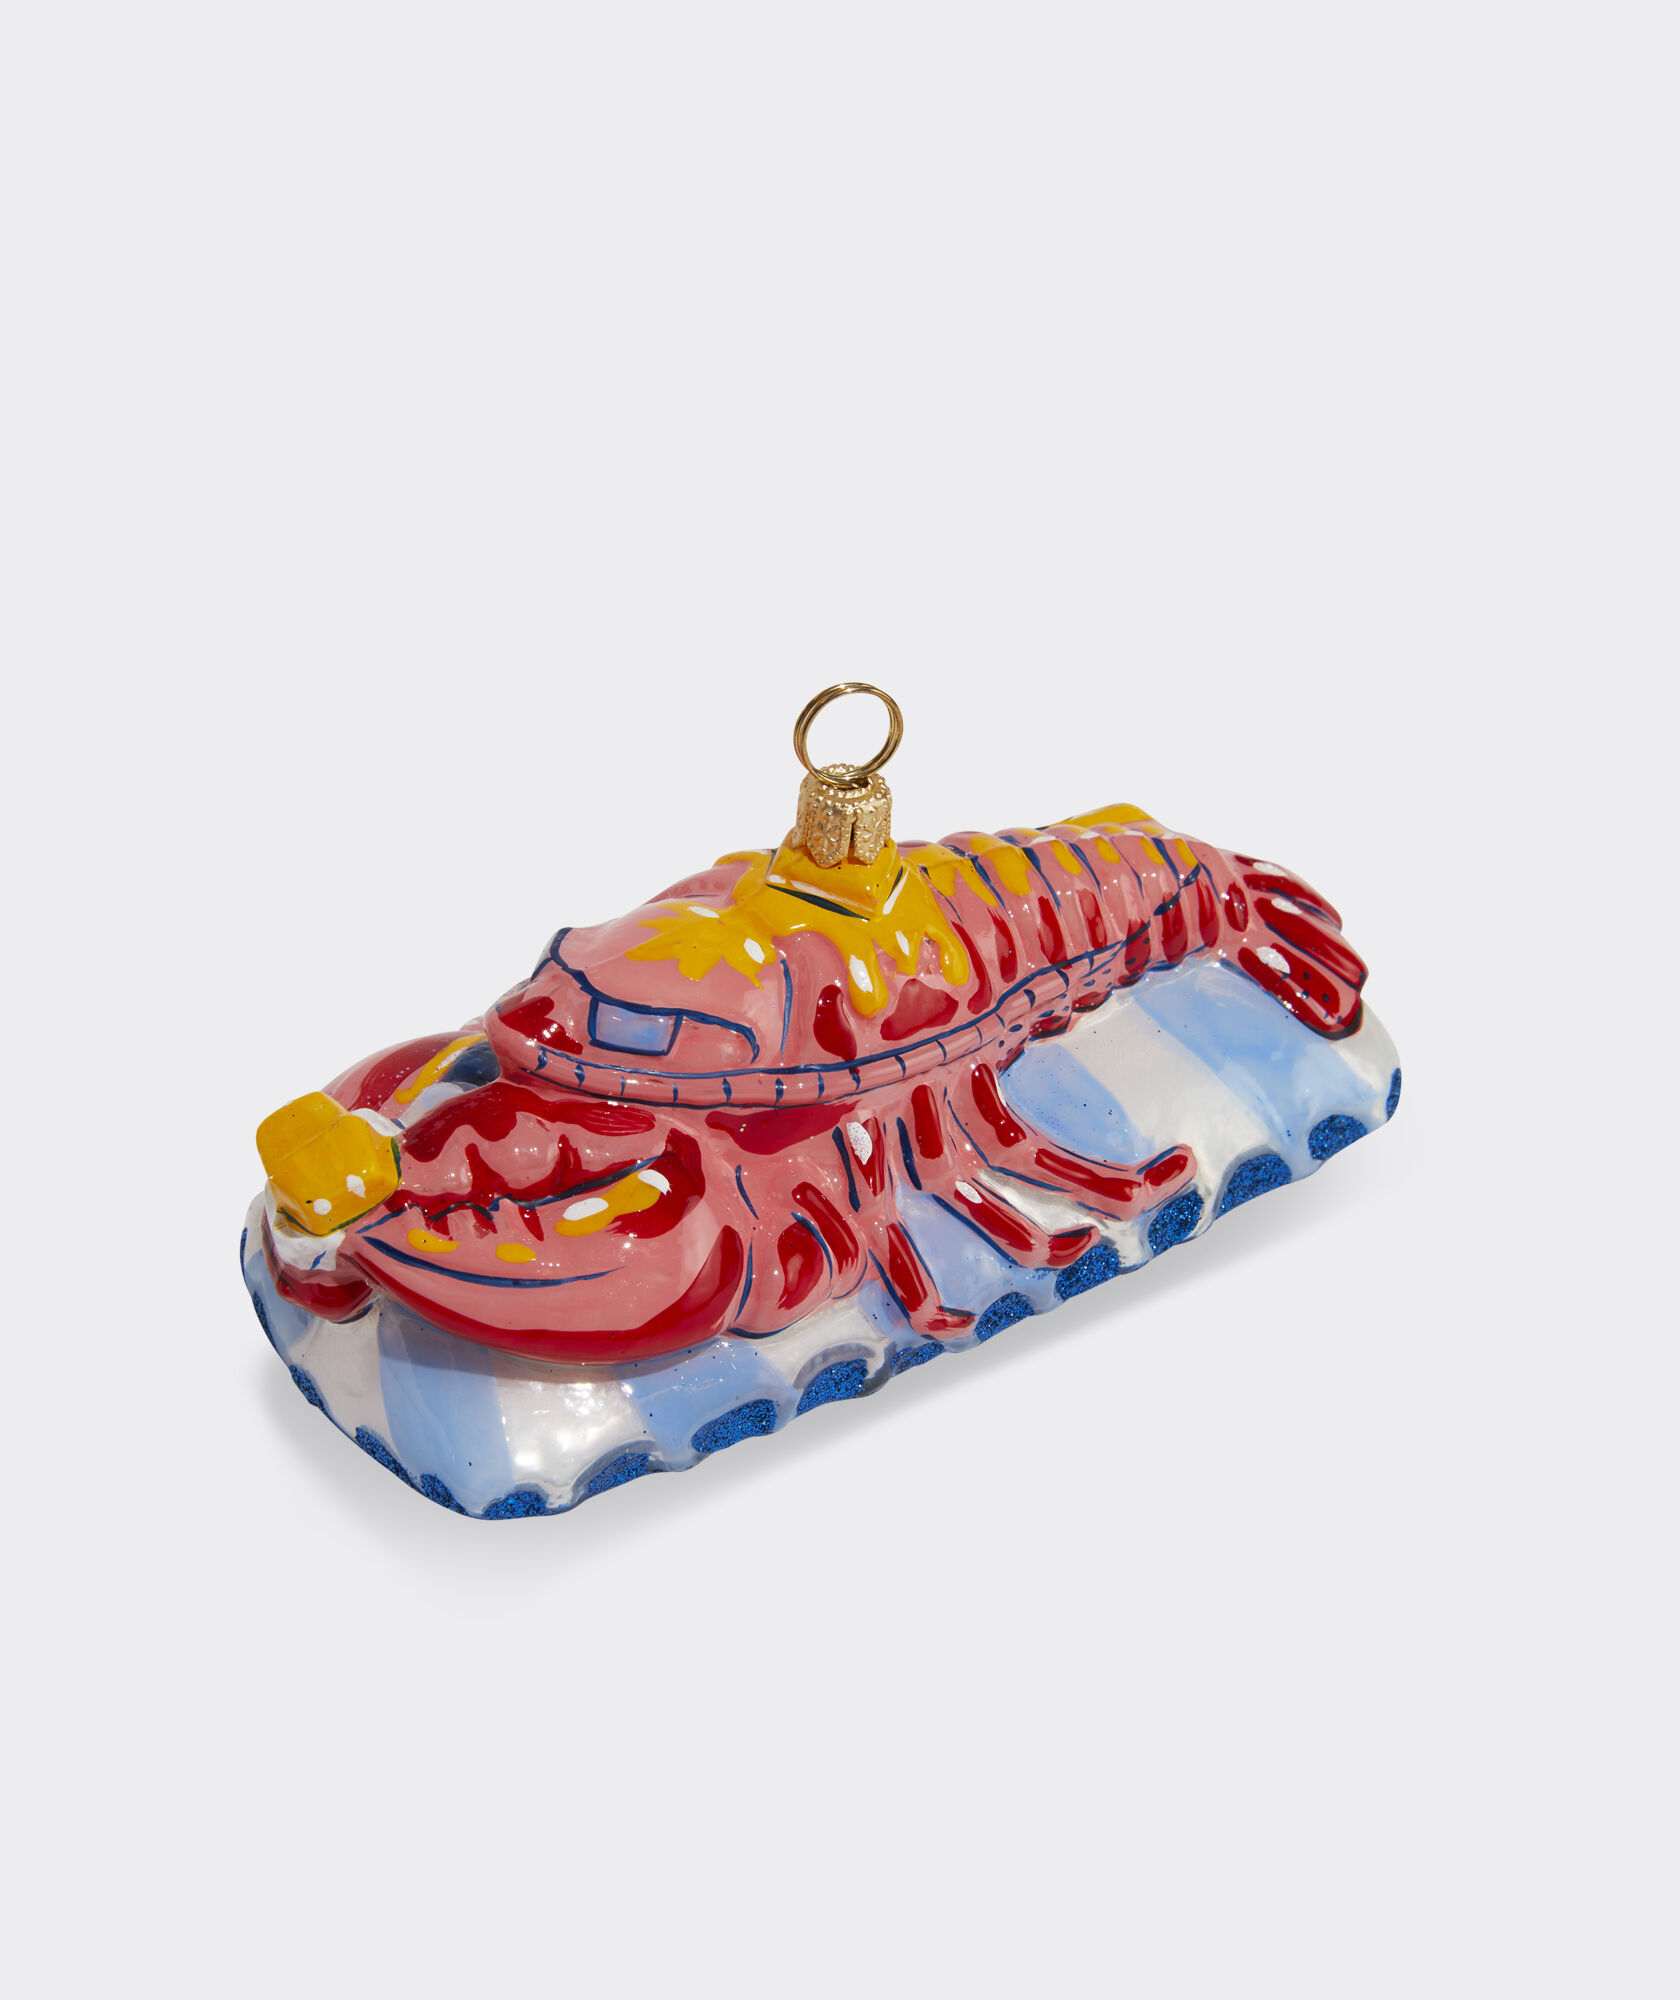 Lobster Bake Ornament